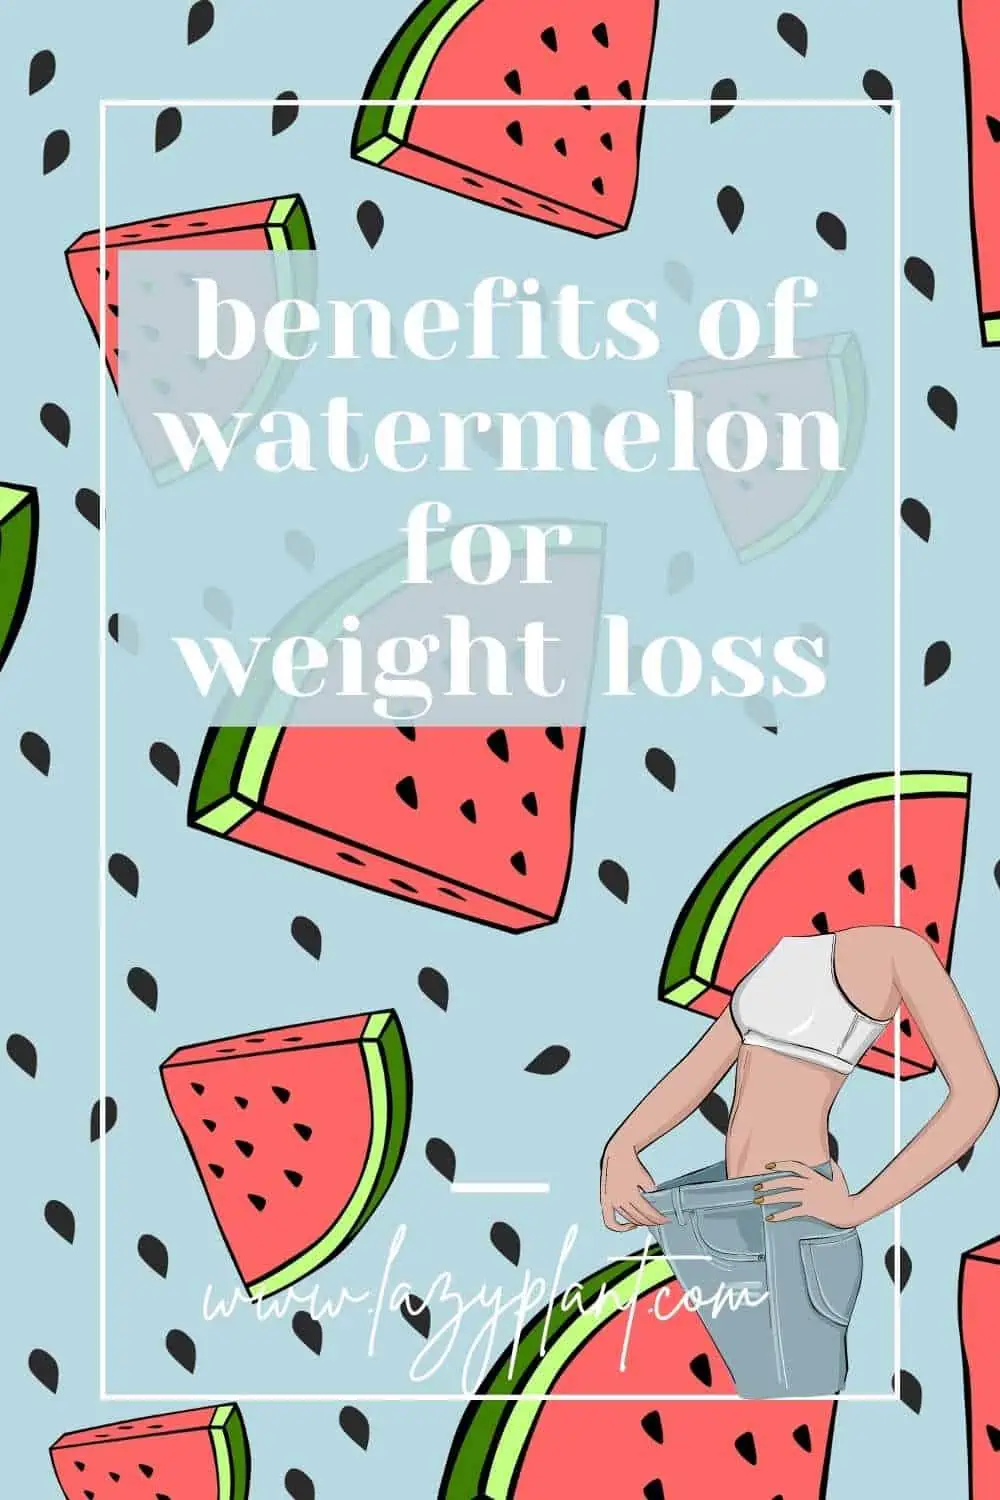 Watermelon burns belly fat.